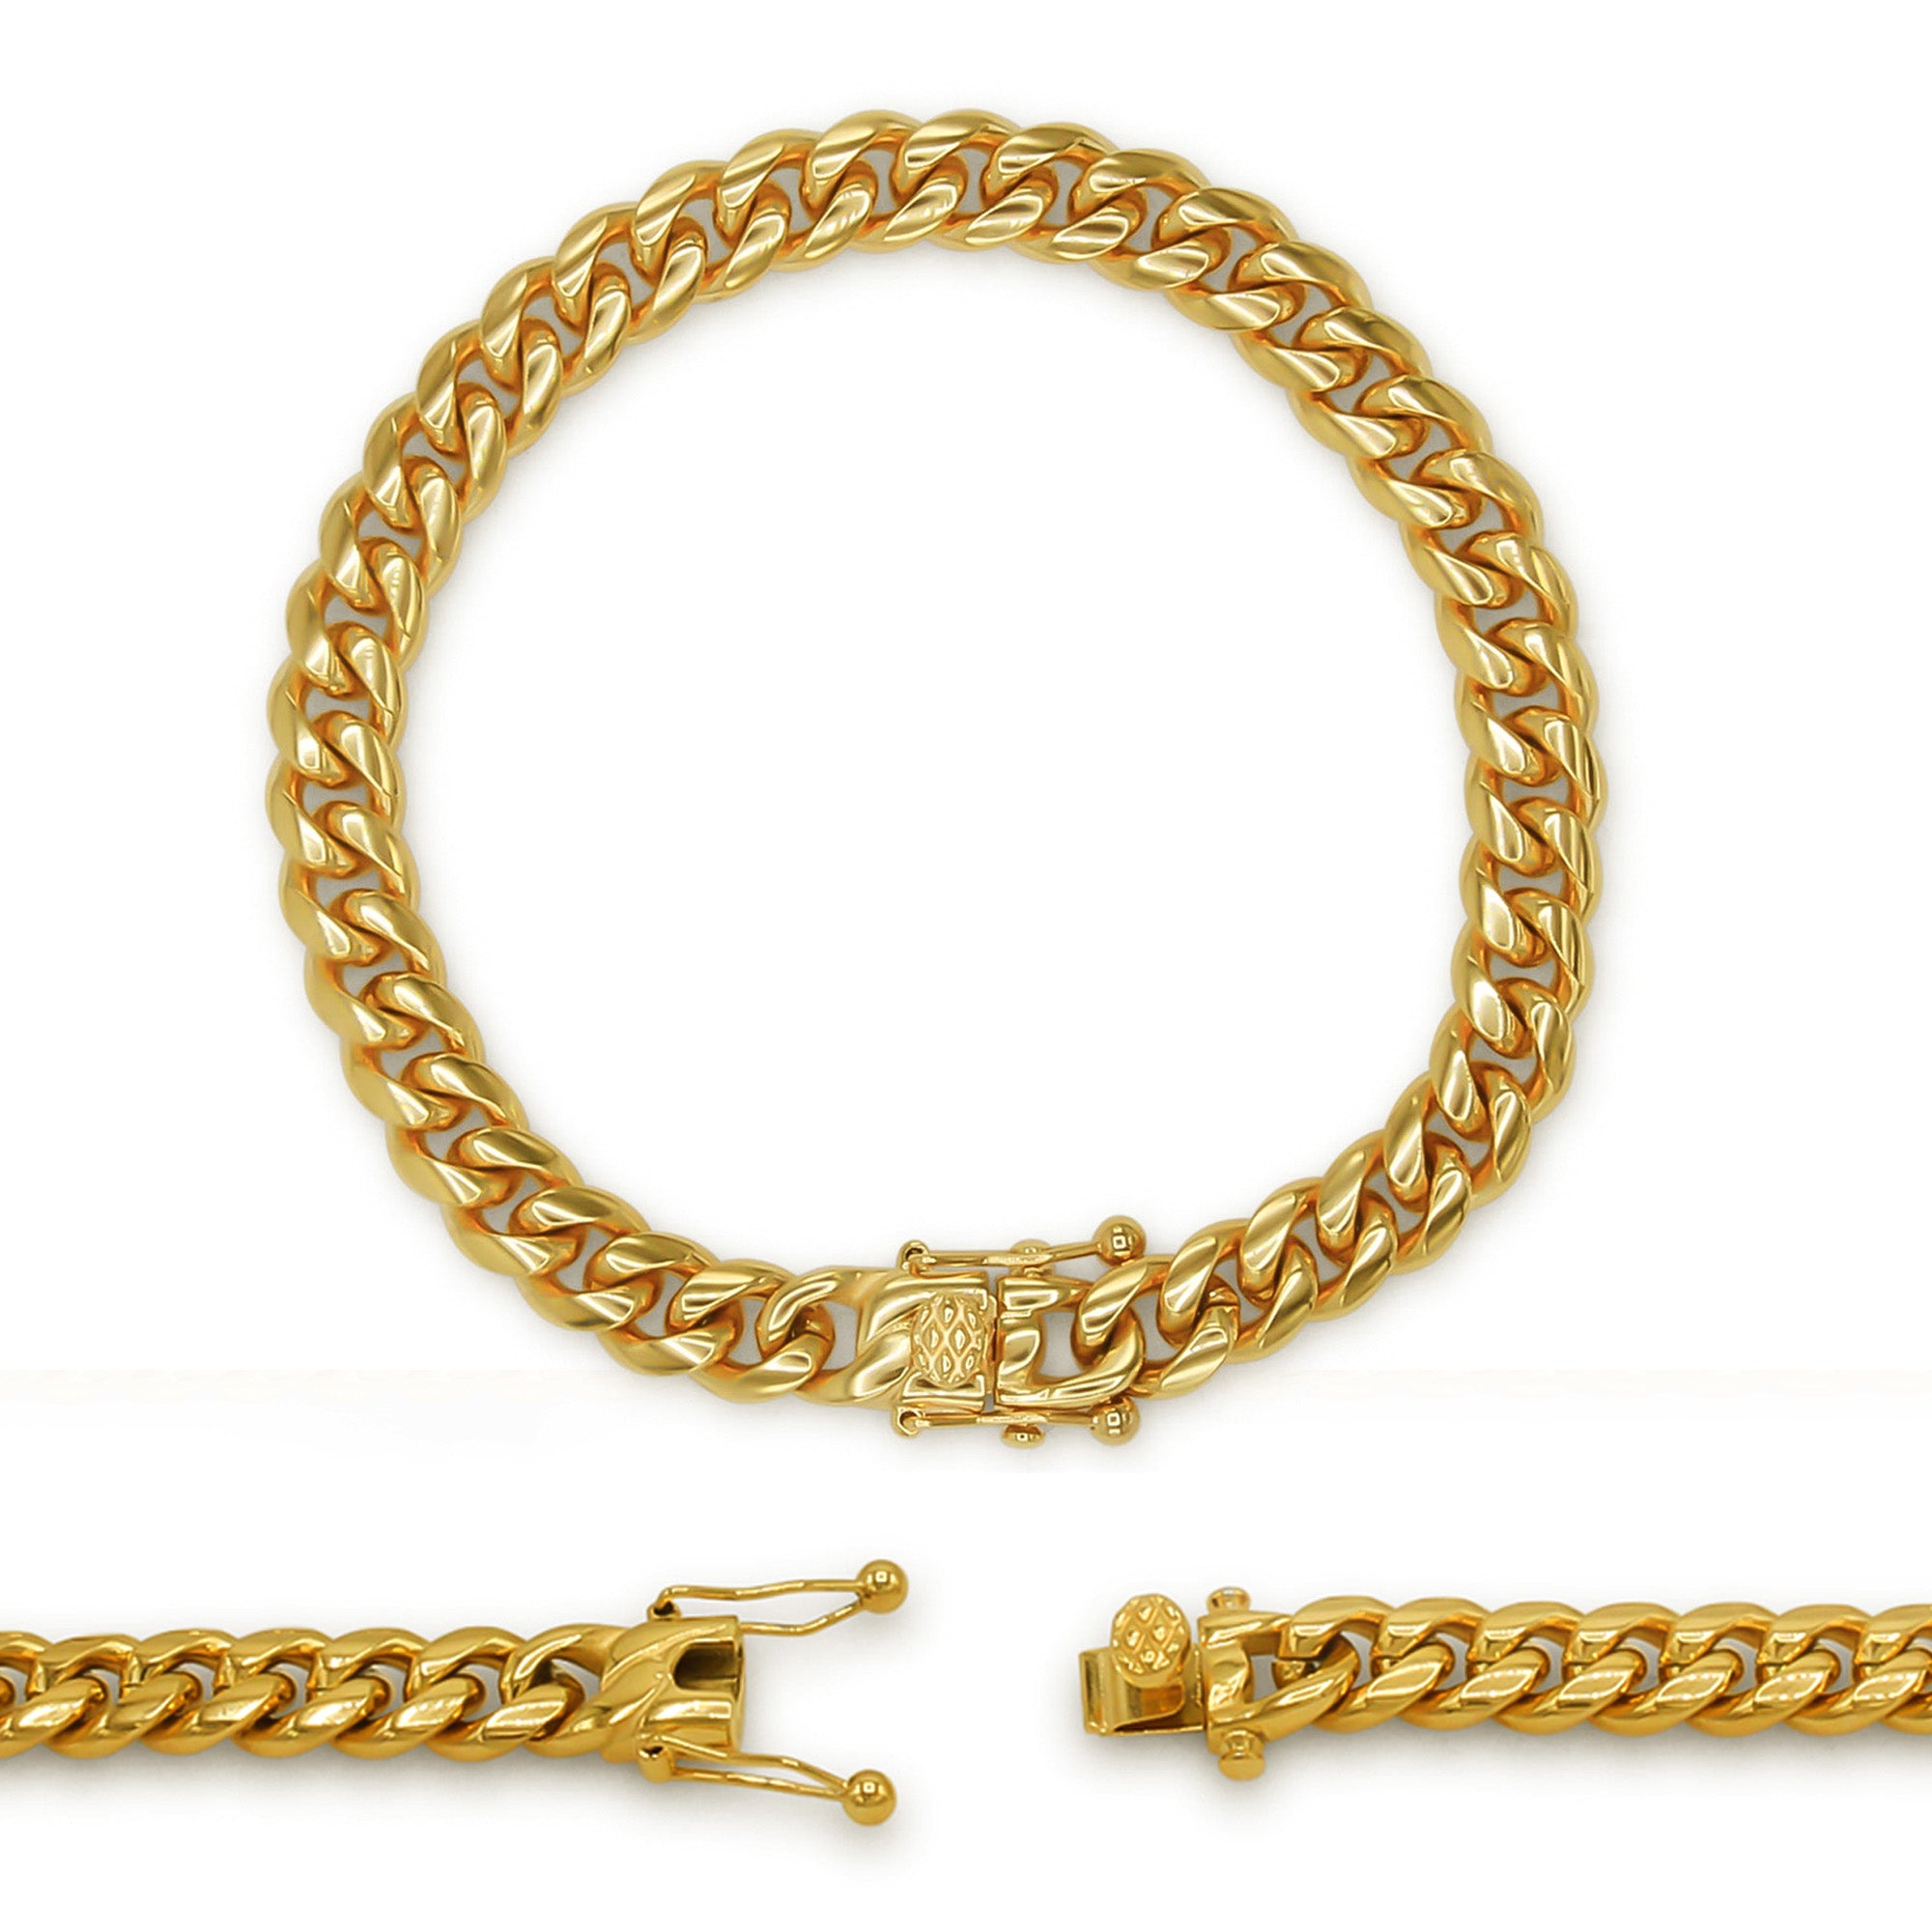 Men's 11.3mm Curb Chain Bracelet in 10K Gold - 9